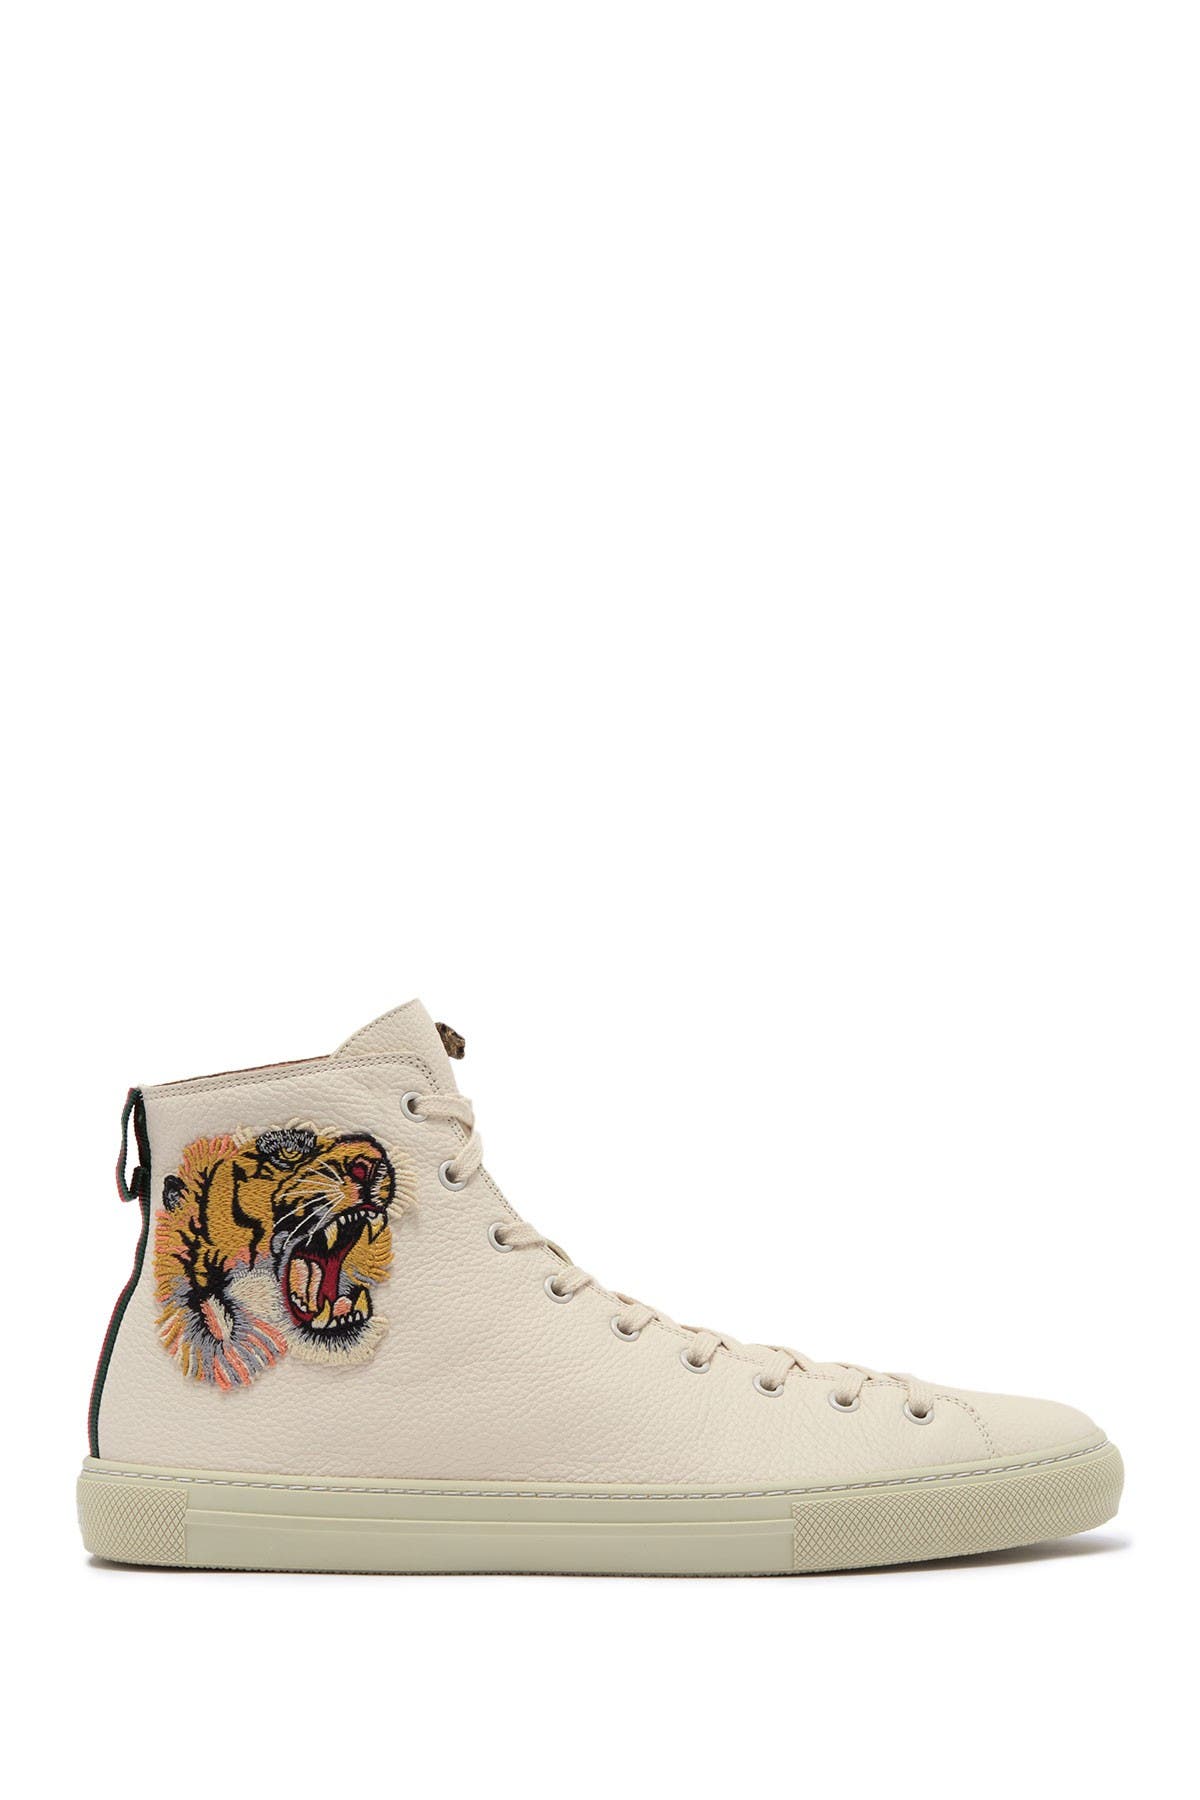 gucci tiger shoes high top